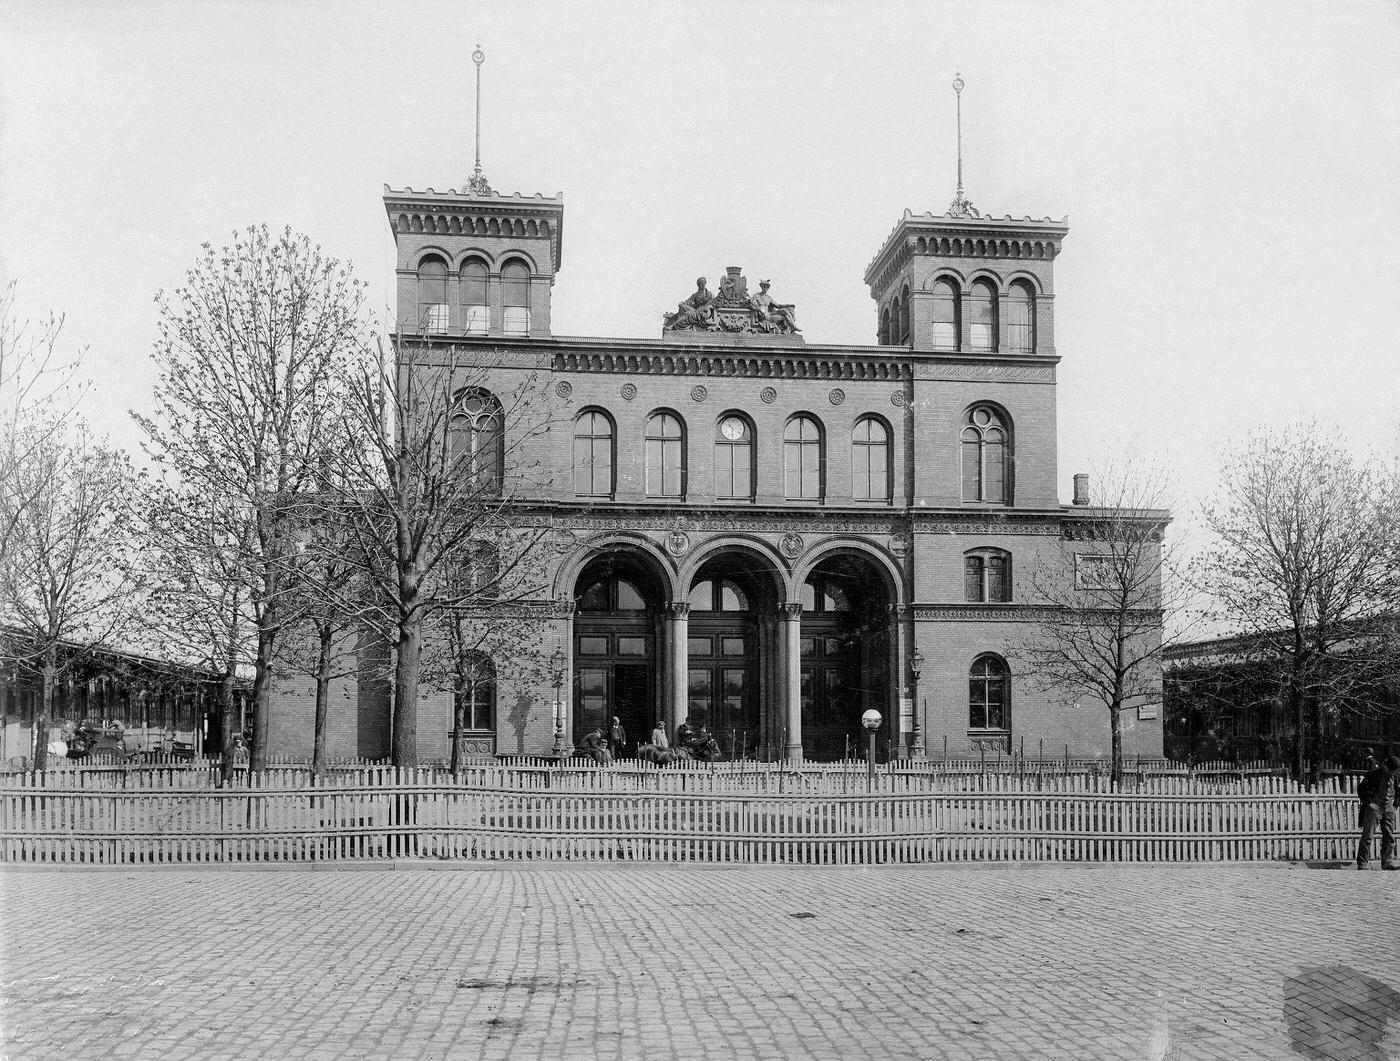 Building of the 'Schlachtvieh-Boerse' in Berlin, Friedrichshain, Germany, 1897